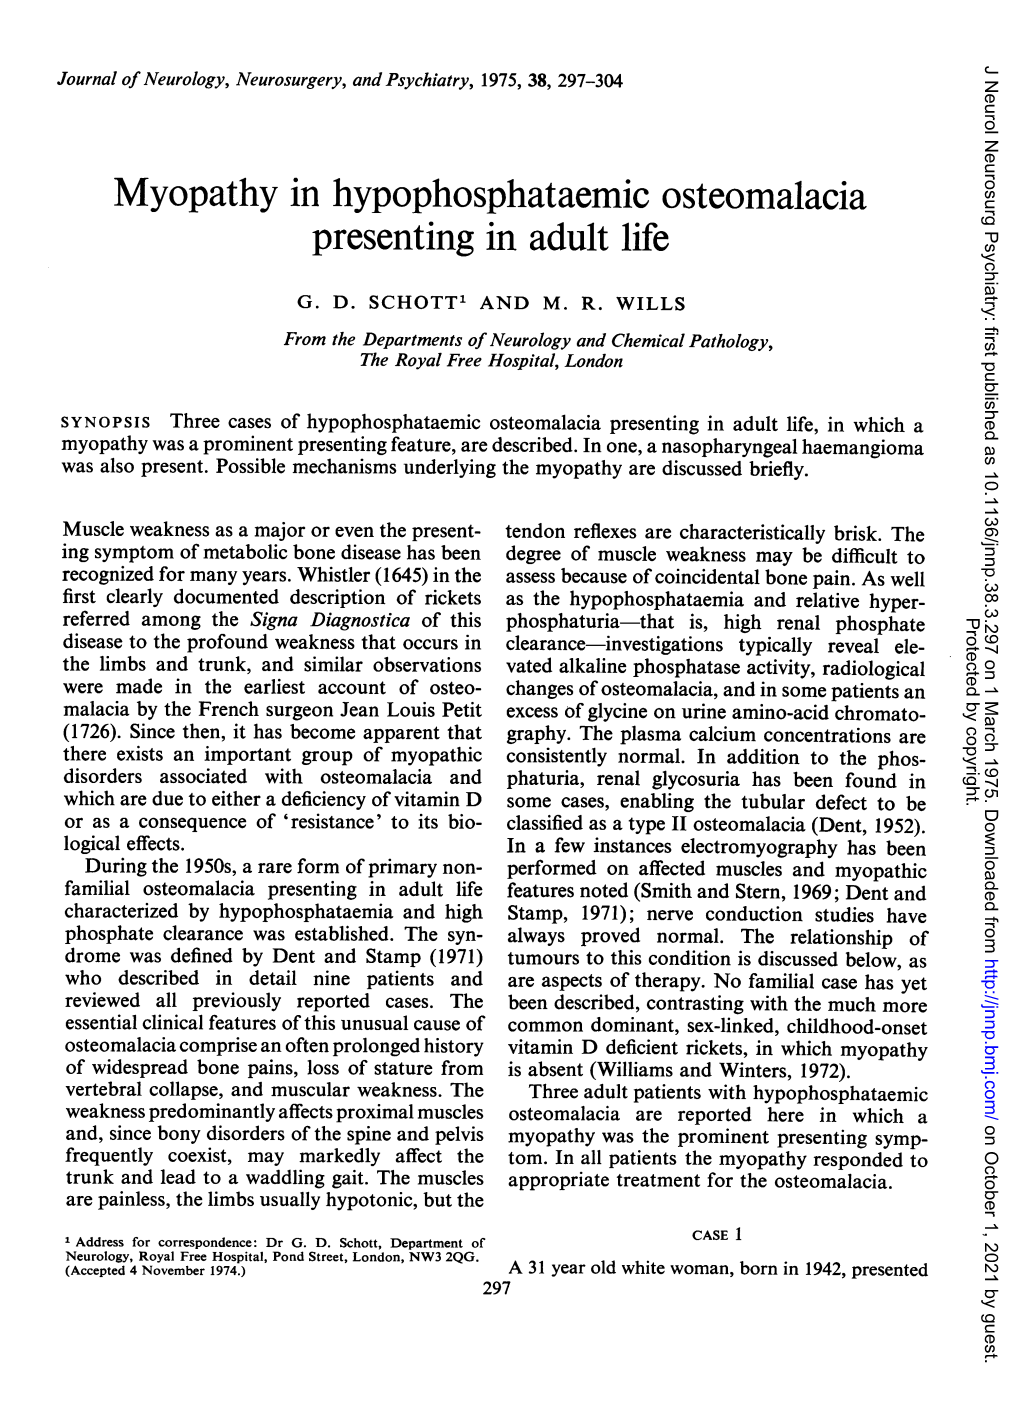 Myopathy in Hypophosphataemic Osteomalacia Presenting in Adult Life